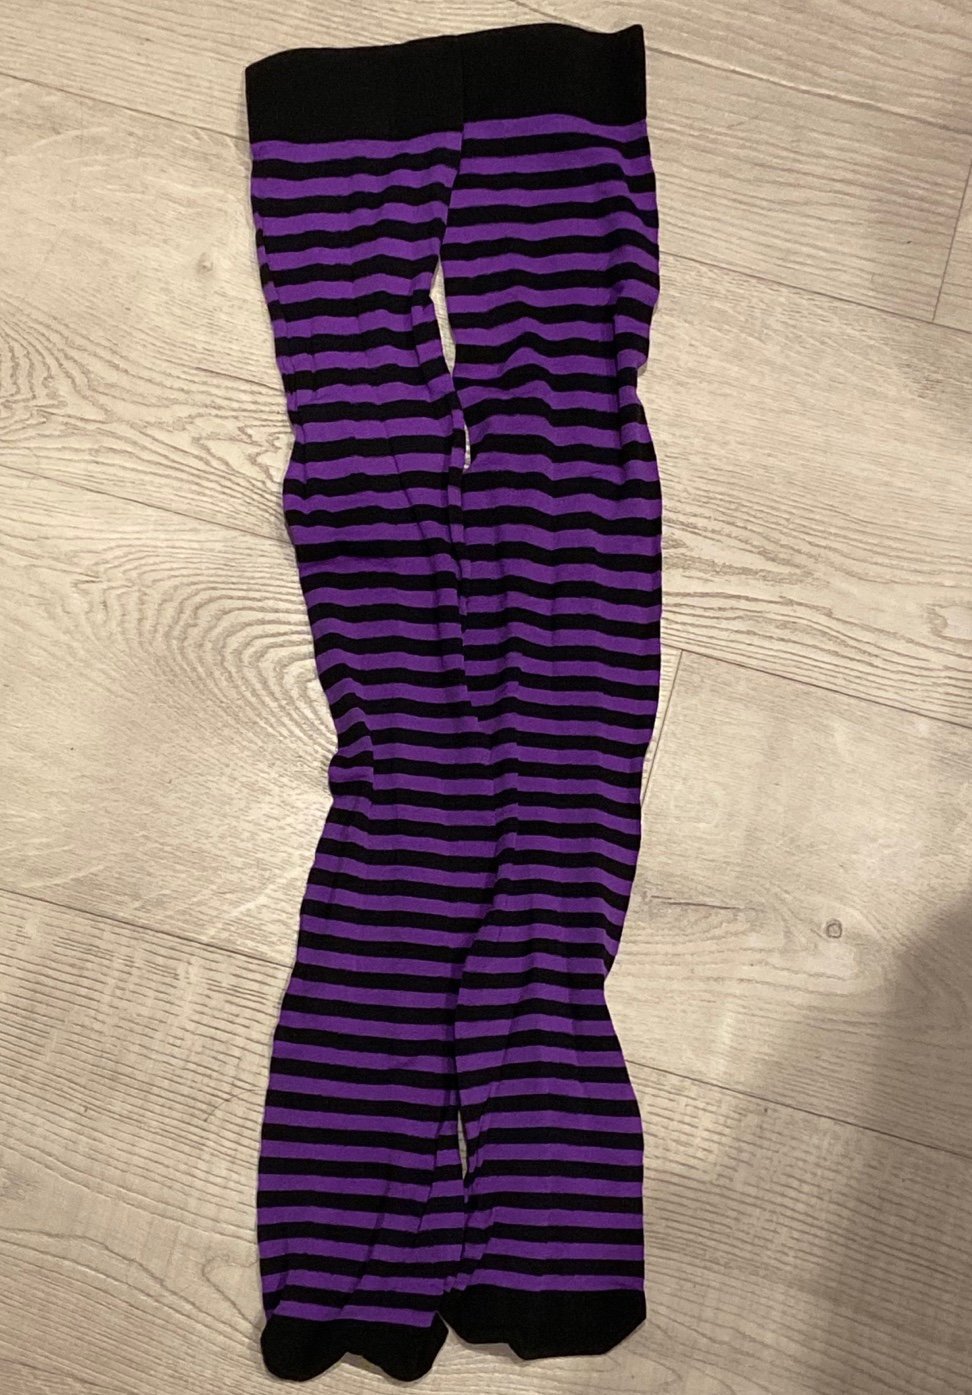 hot topic striped purple and black thigh high socks 7i8